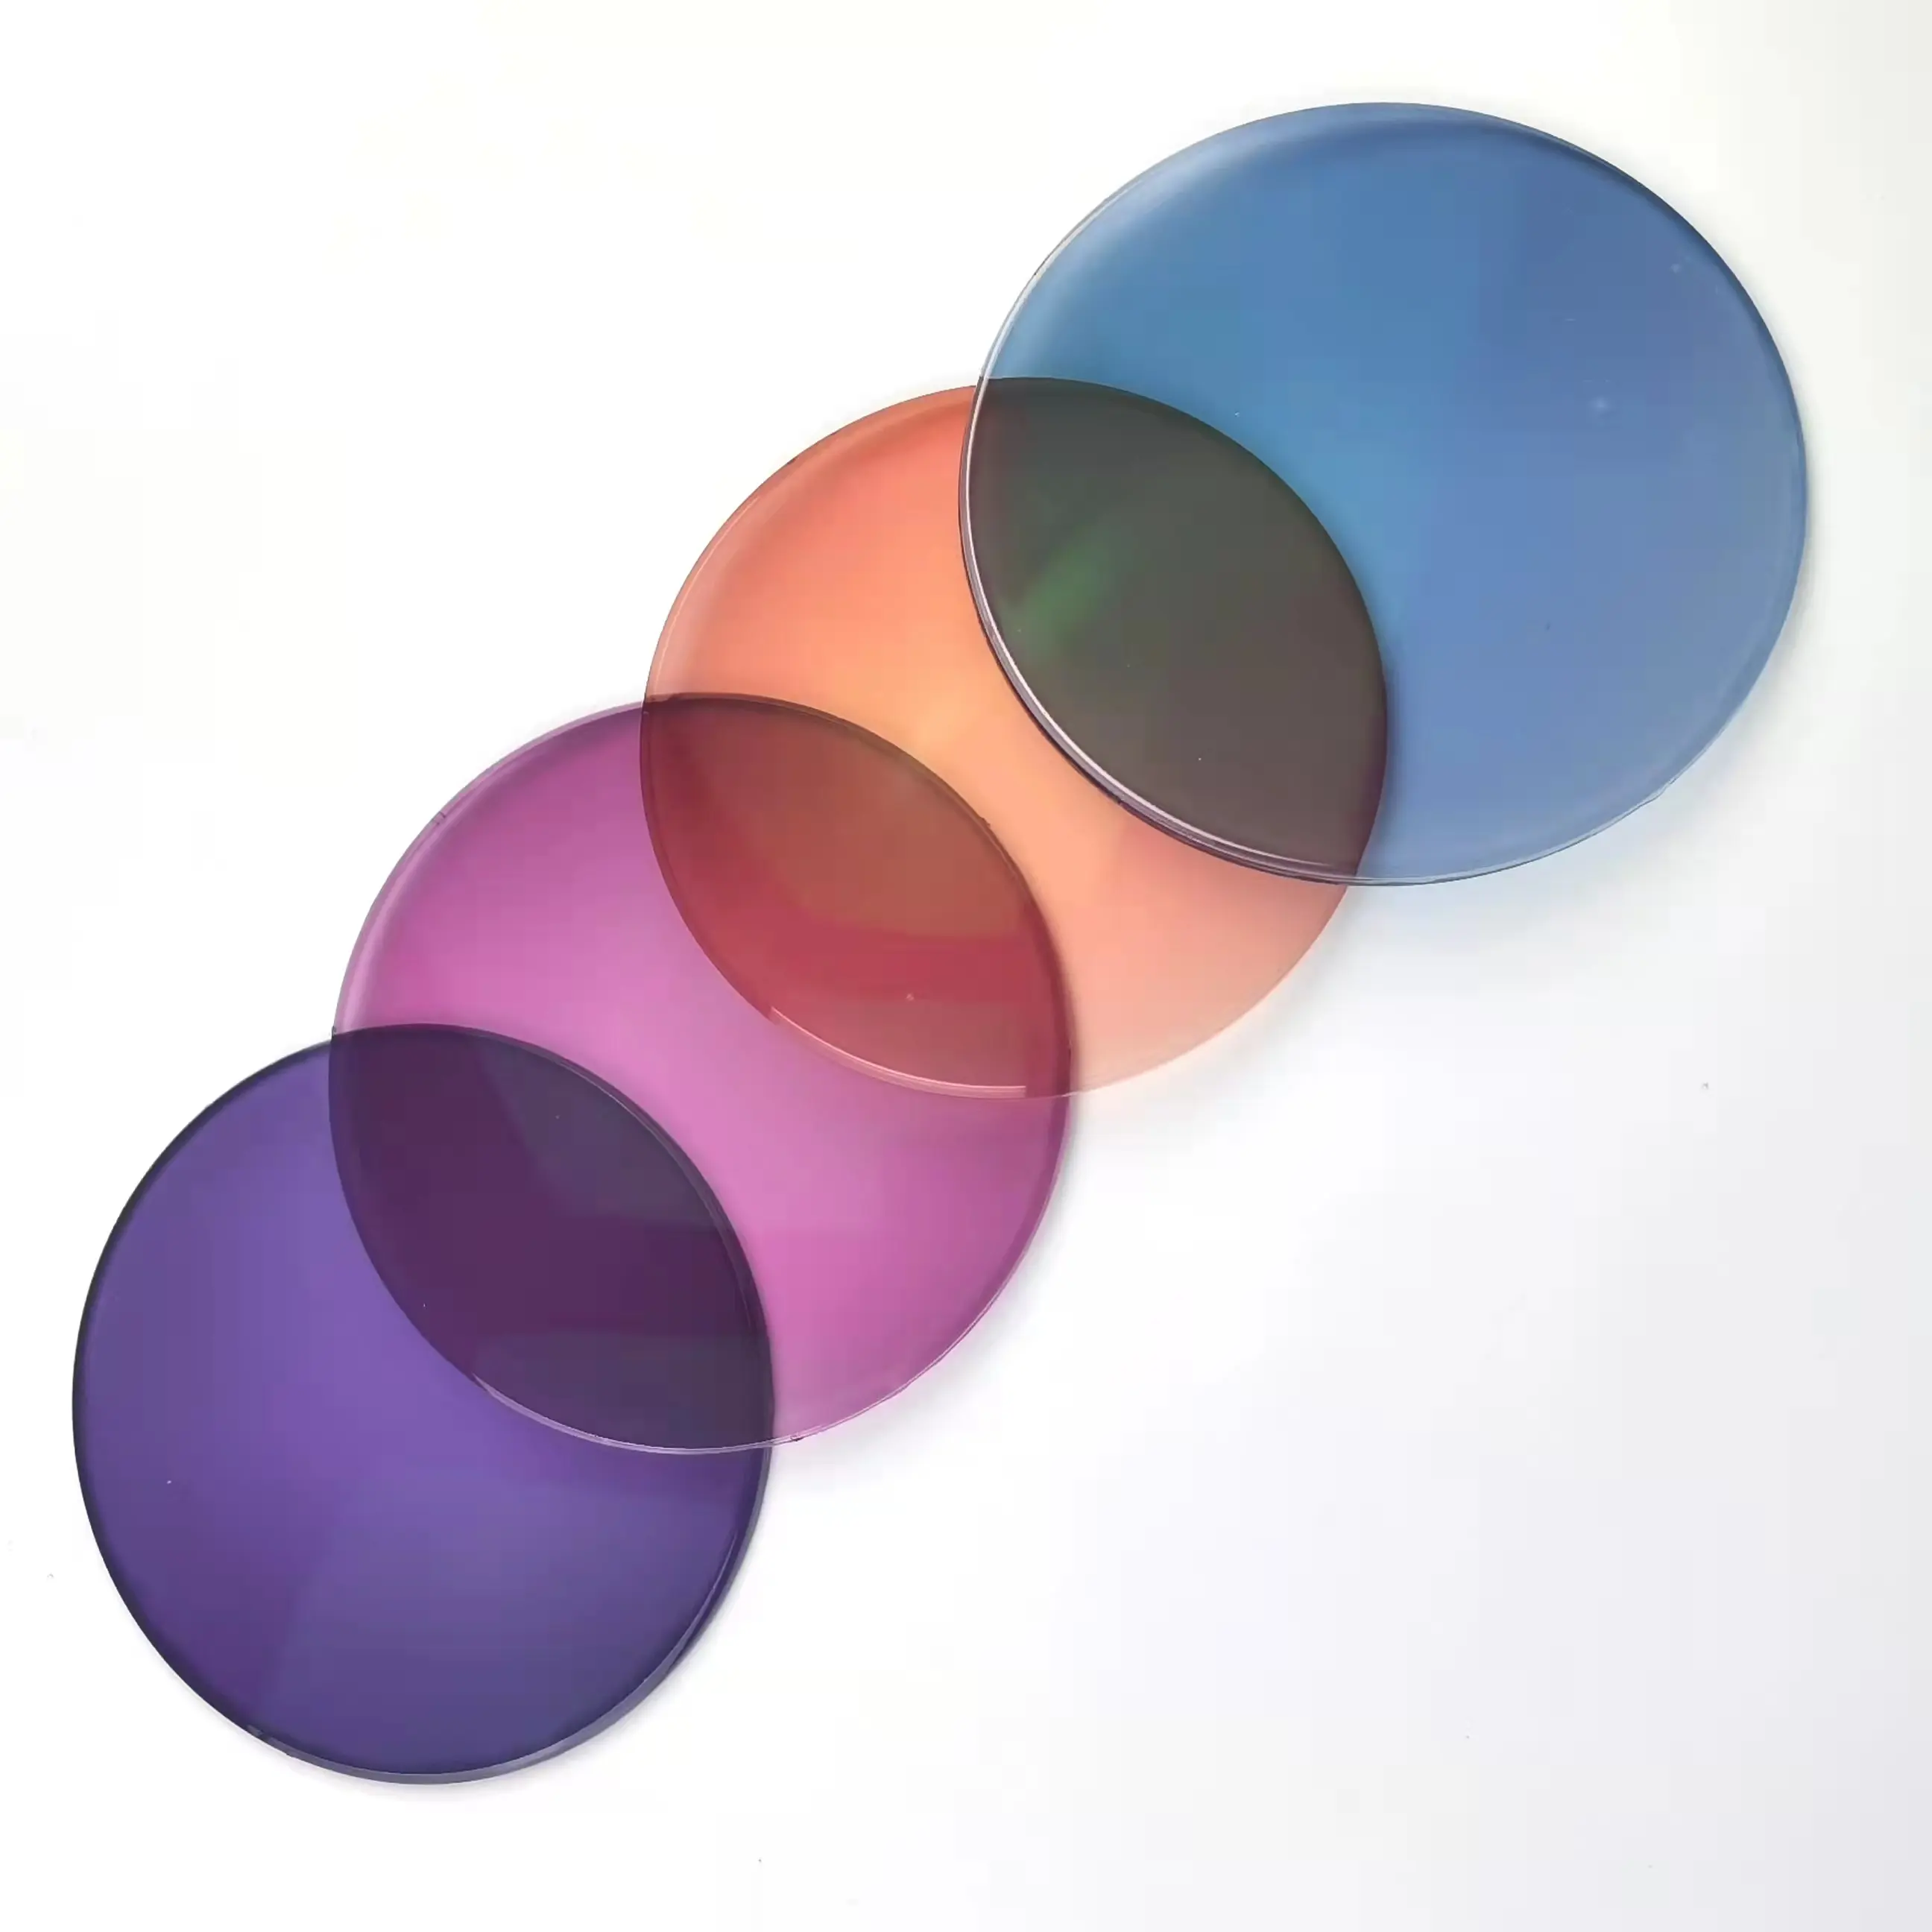 CR39 1.56 Photochromic Pink/Purple/blue/Orange Transition Optical Eyeglasses Lenses